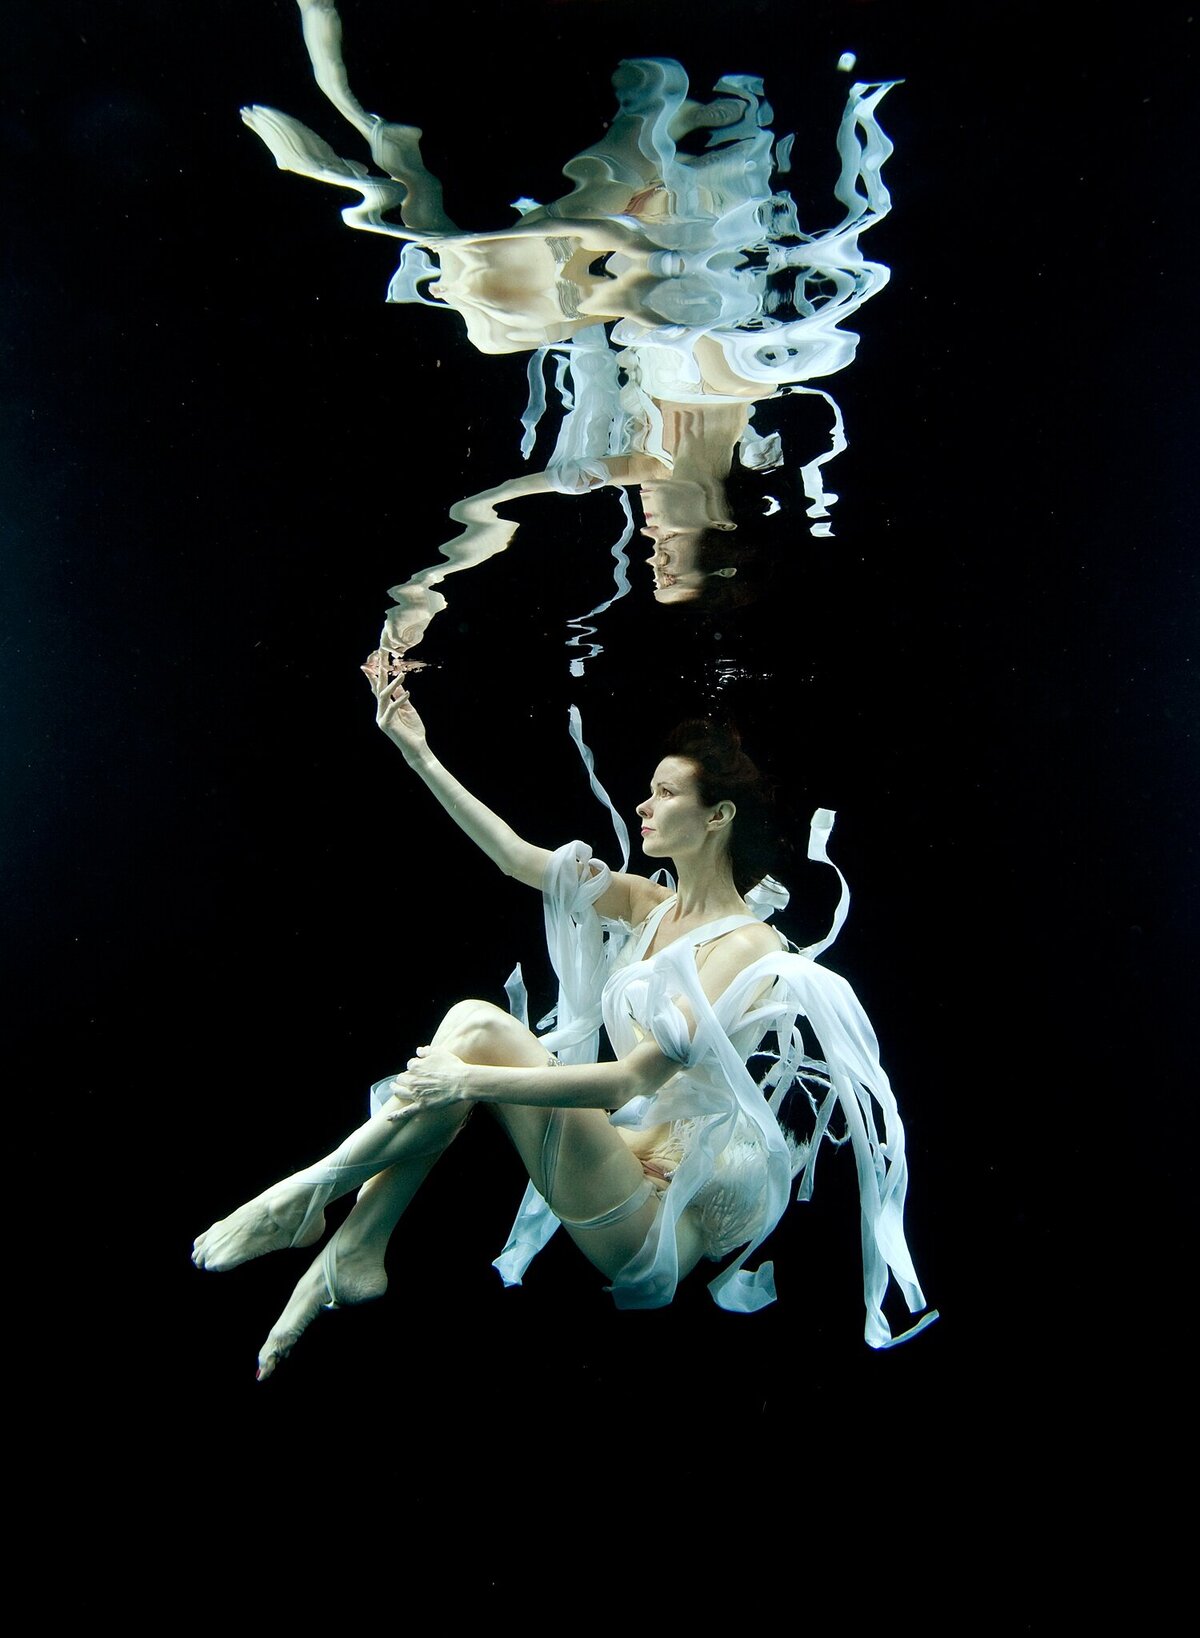 Underwater-New-York-photographer-036